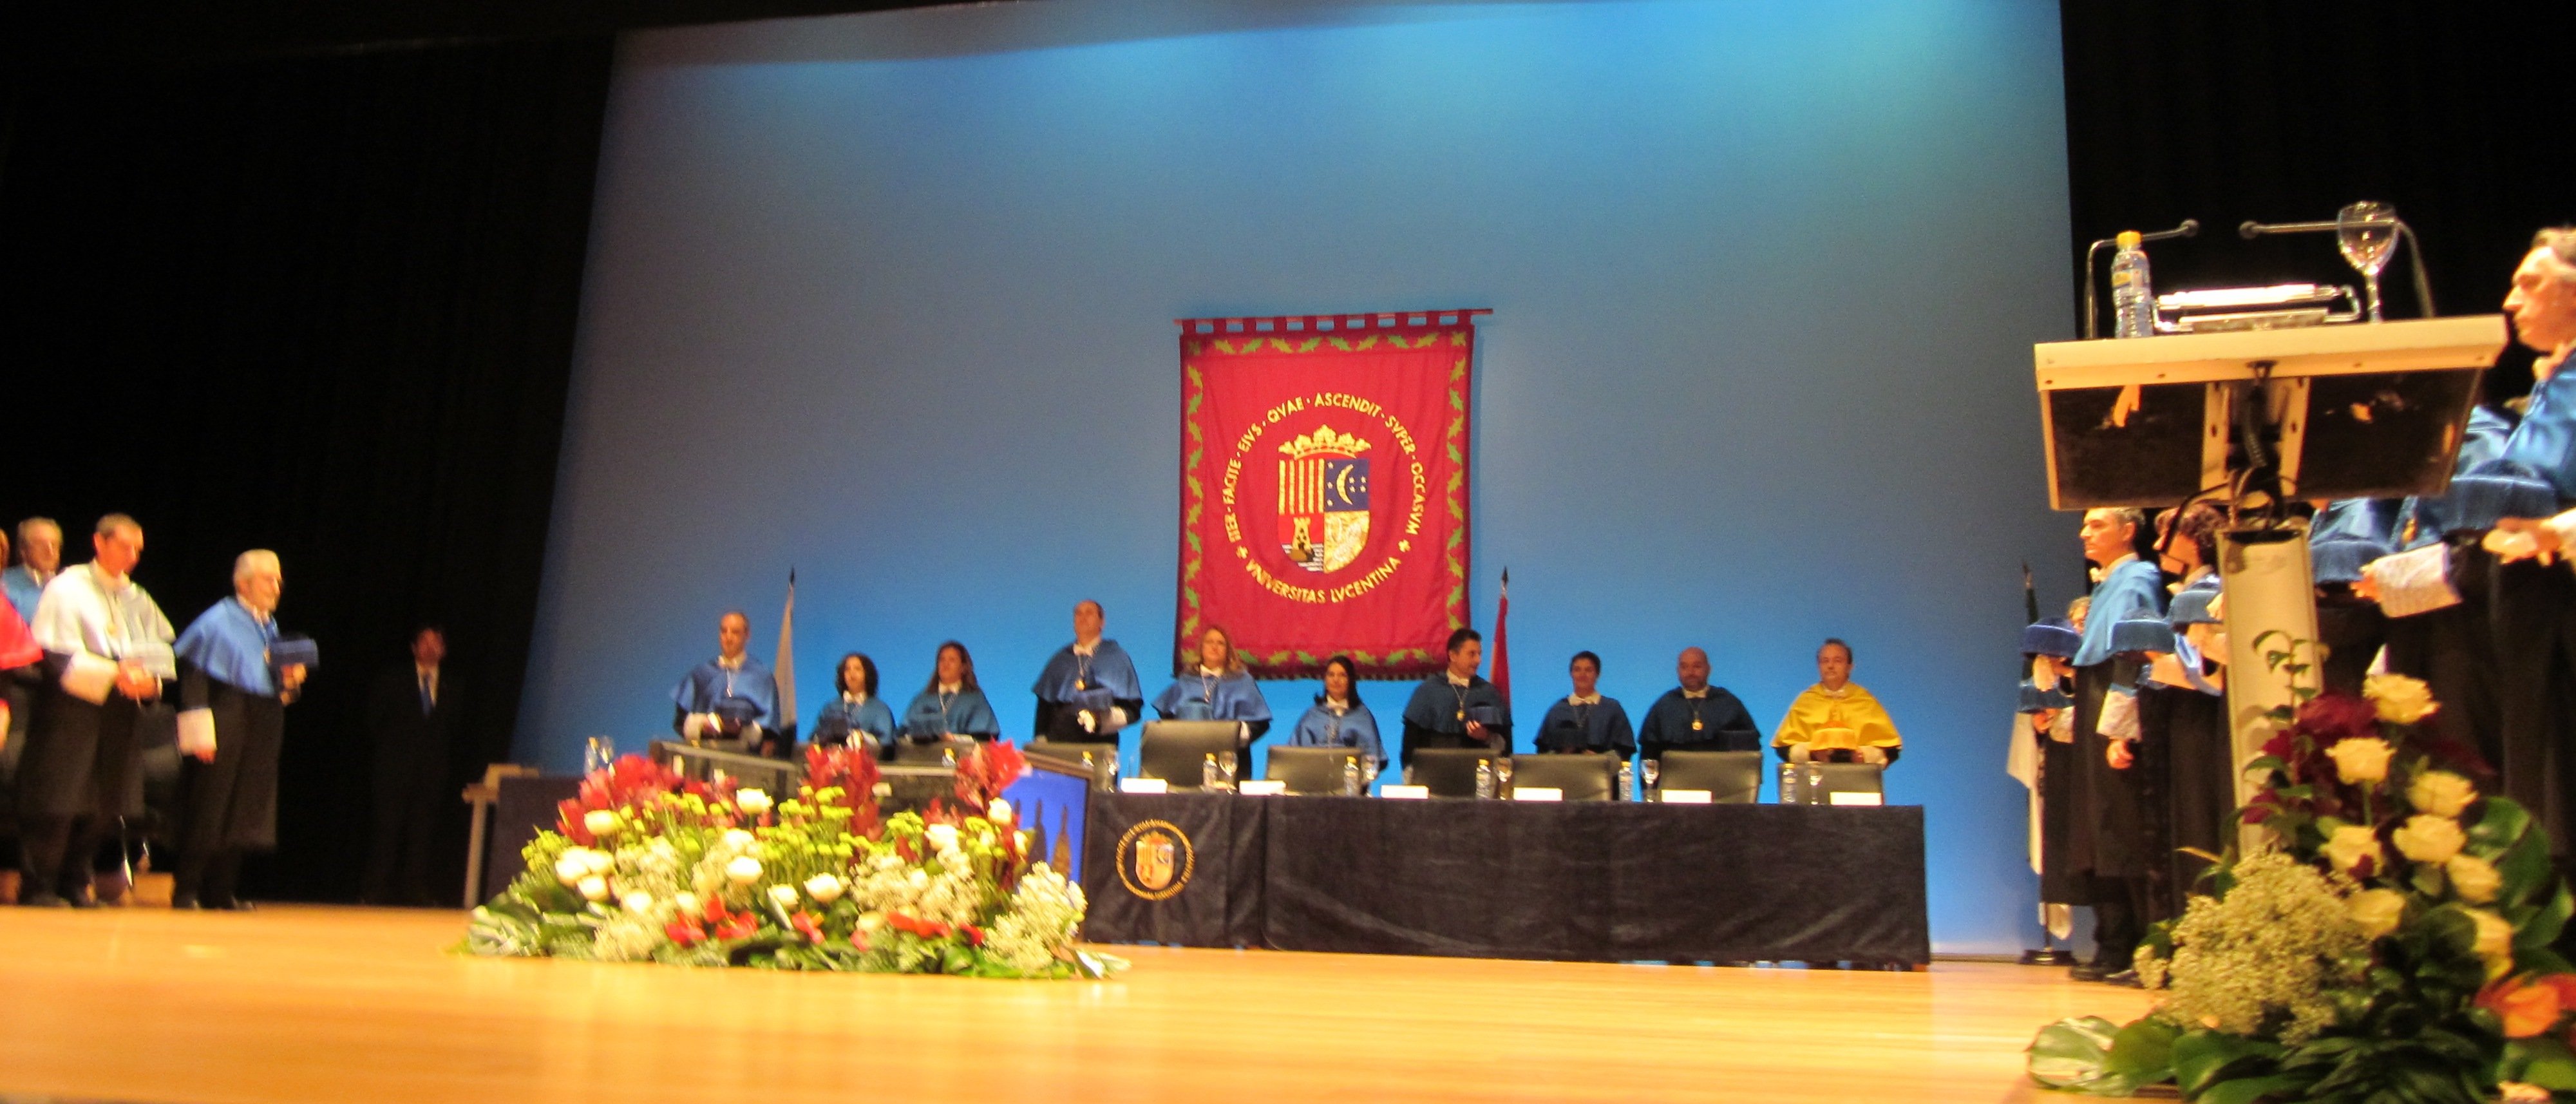 2011 Saint Alberto Magno award from the University of Alicante.